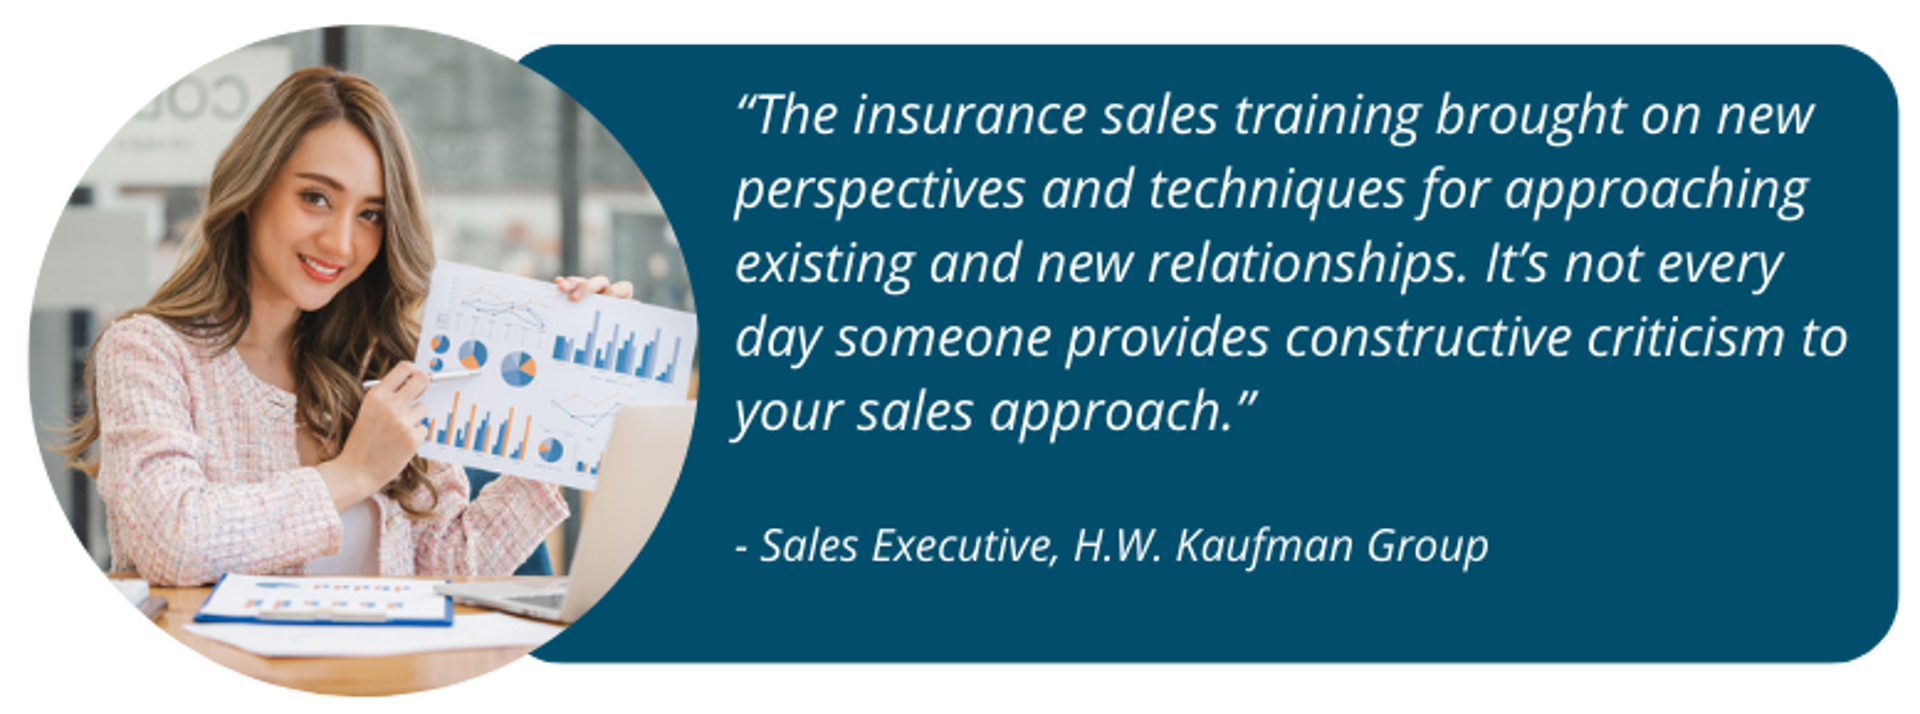 insurance-sales-training-testimonial.png